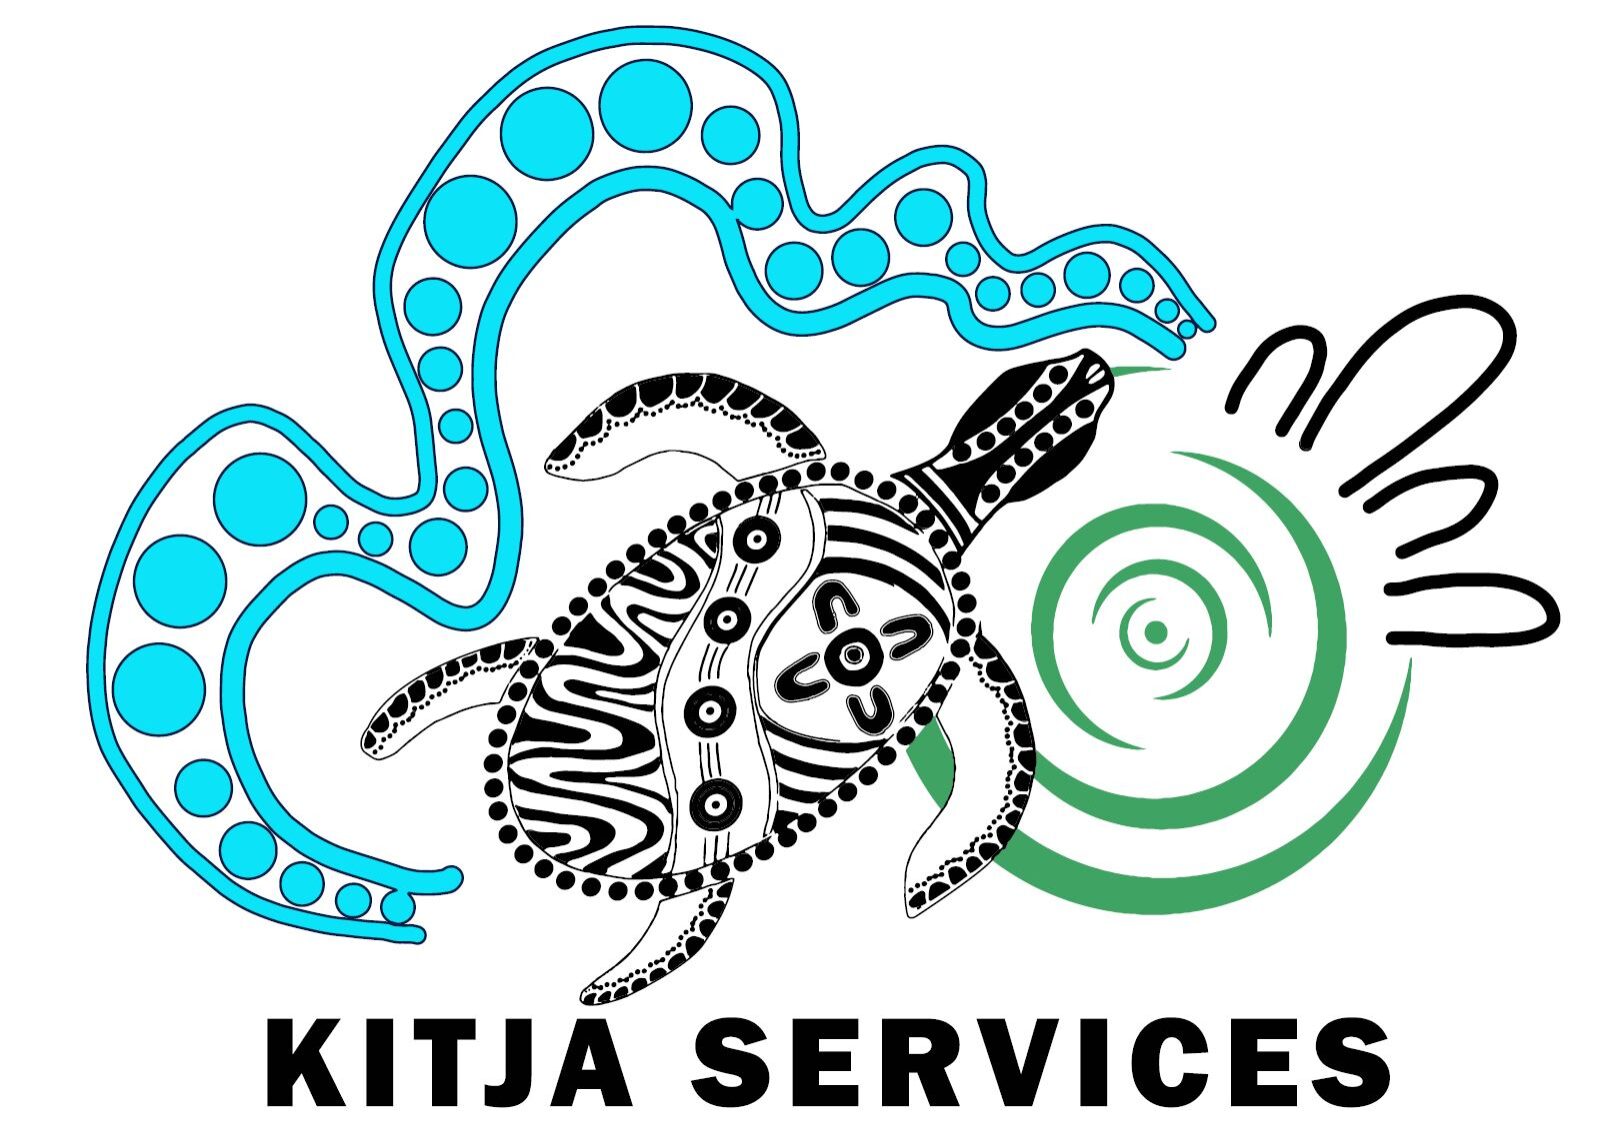 Kitja Industrial services logo